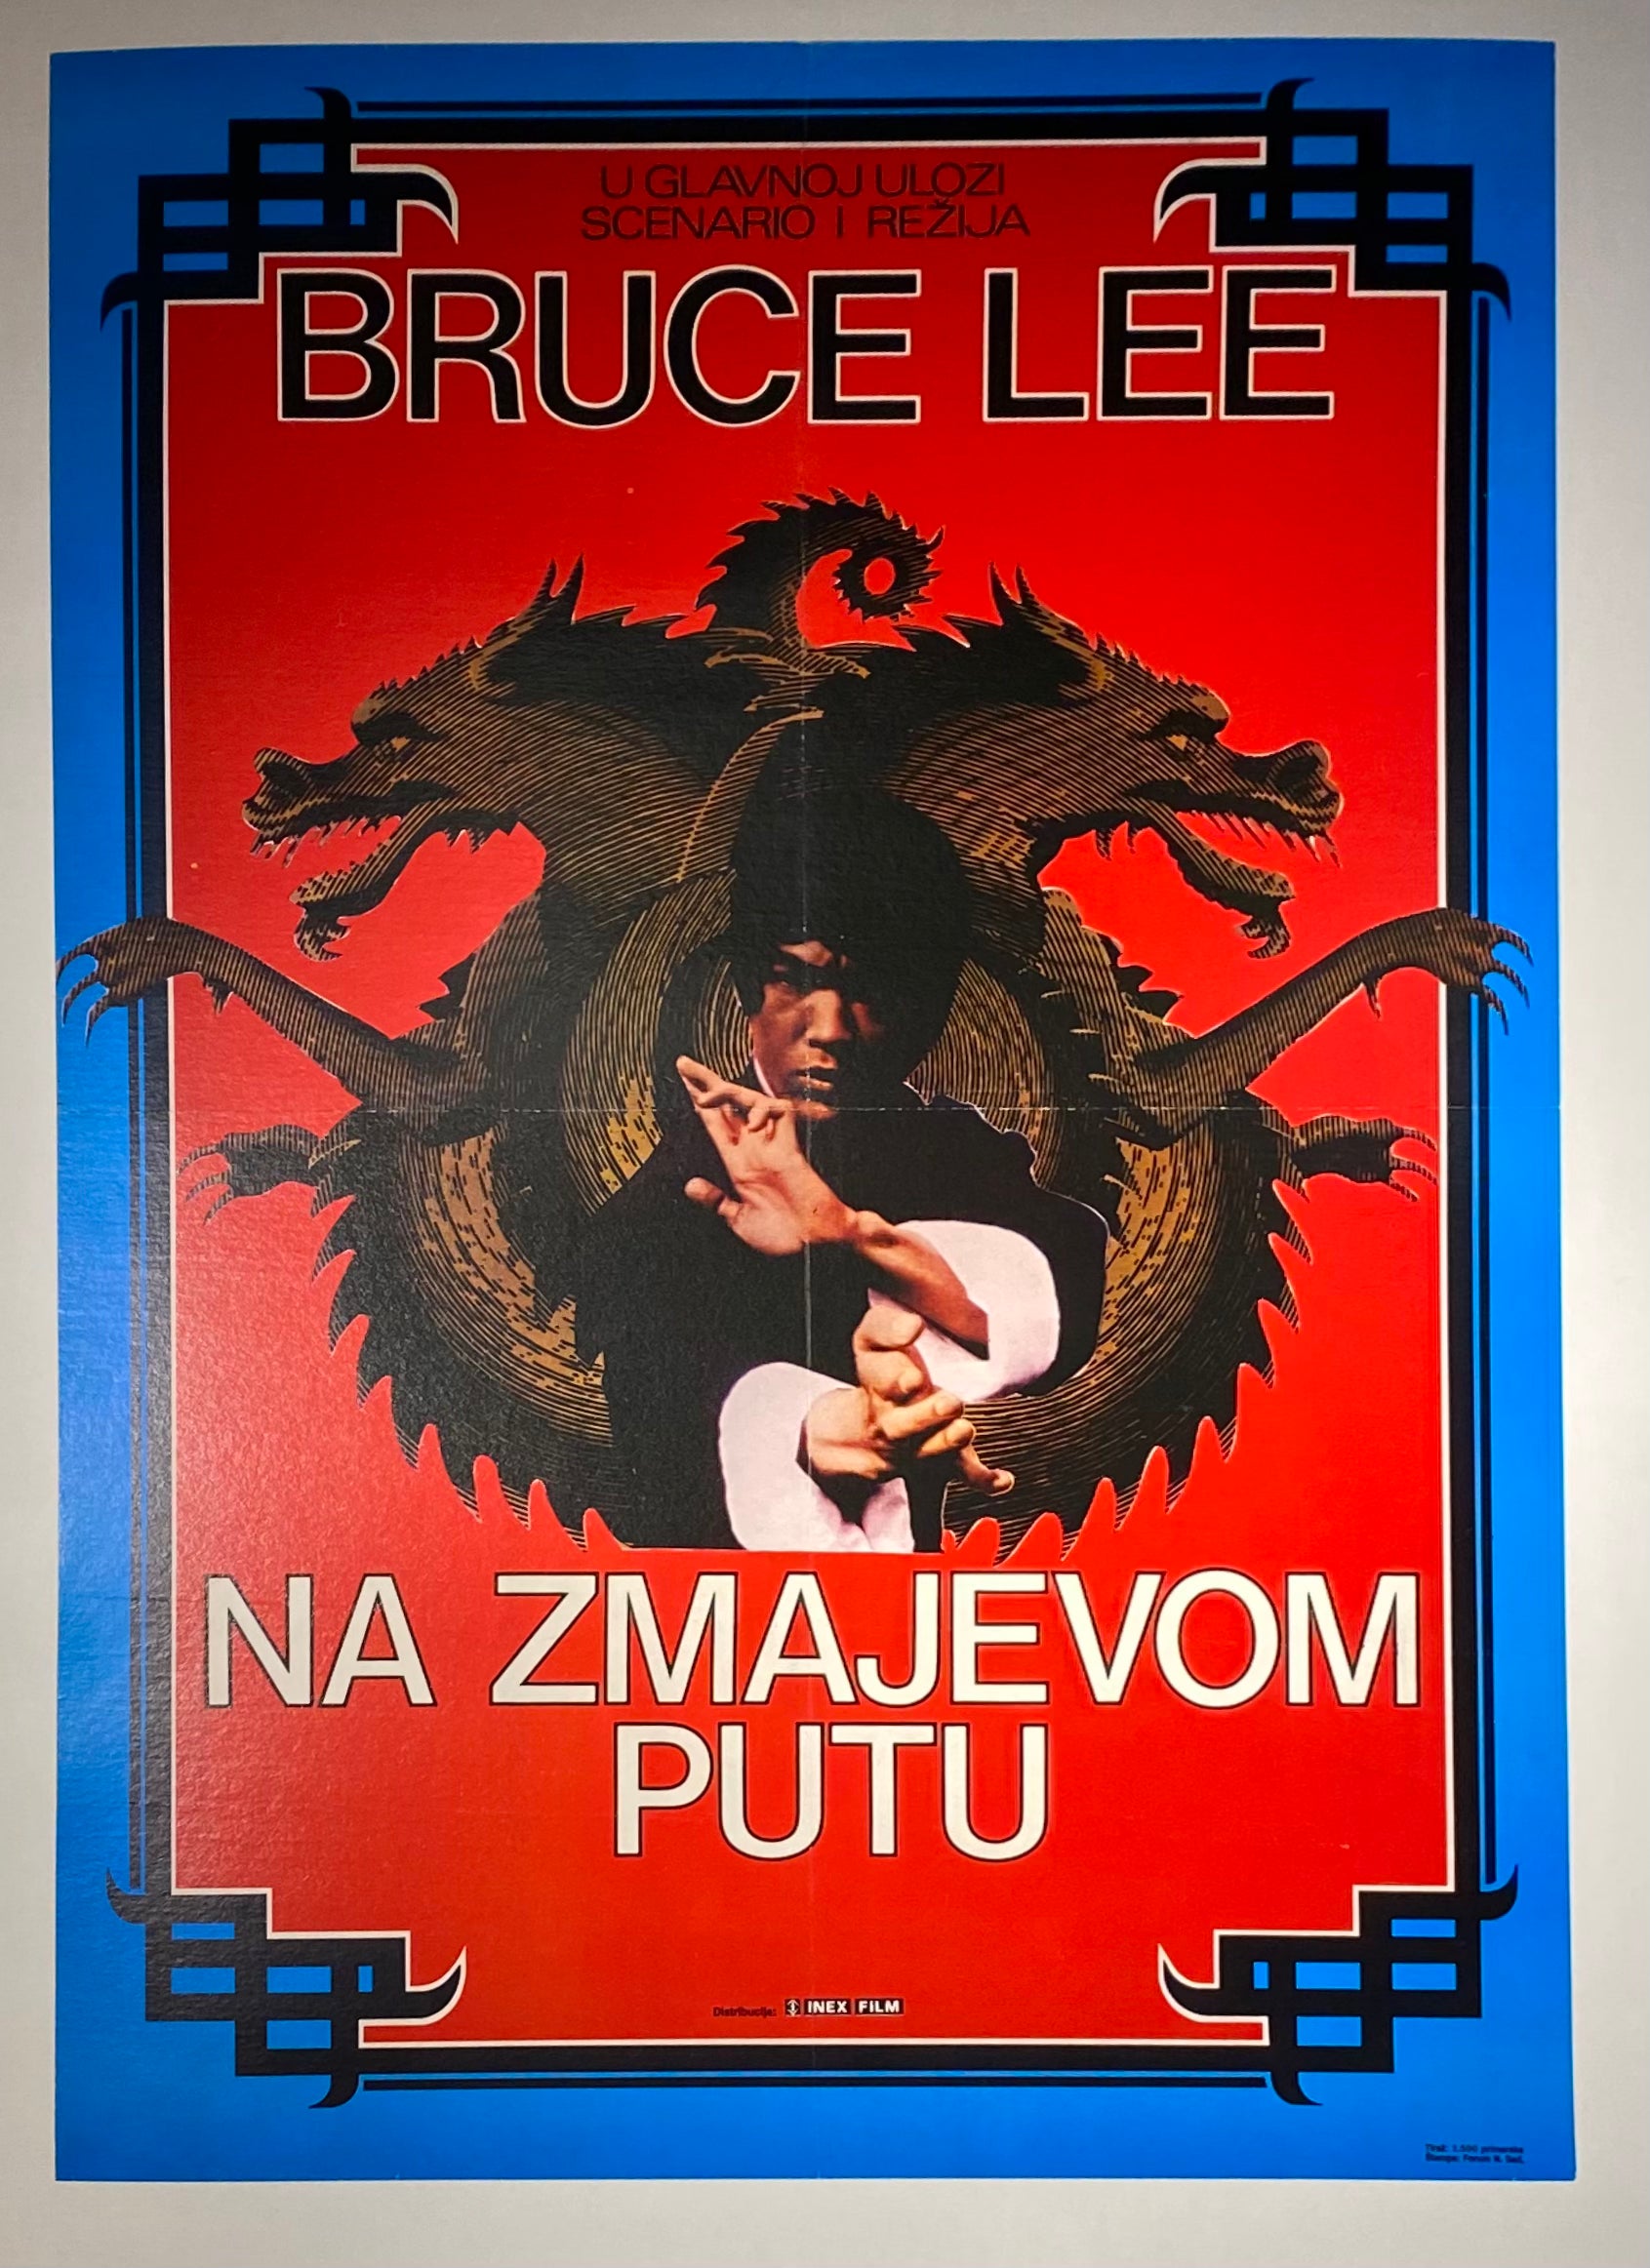 Bruce Lee - Return of the Dragon